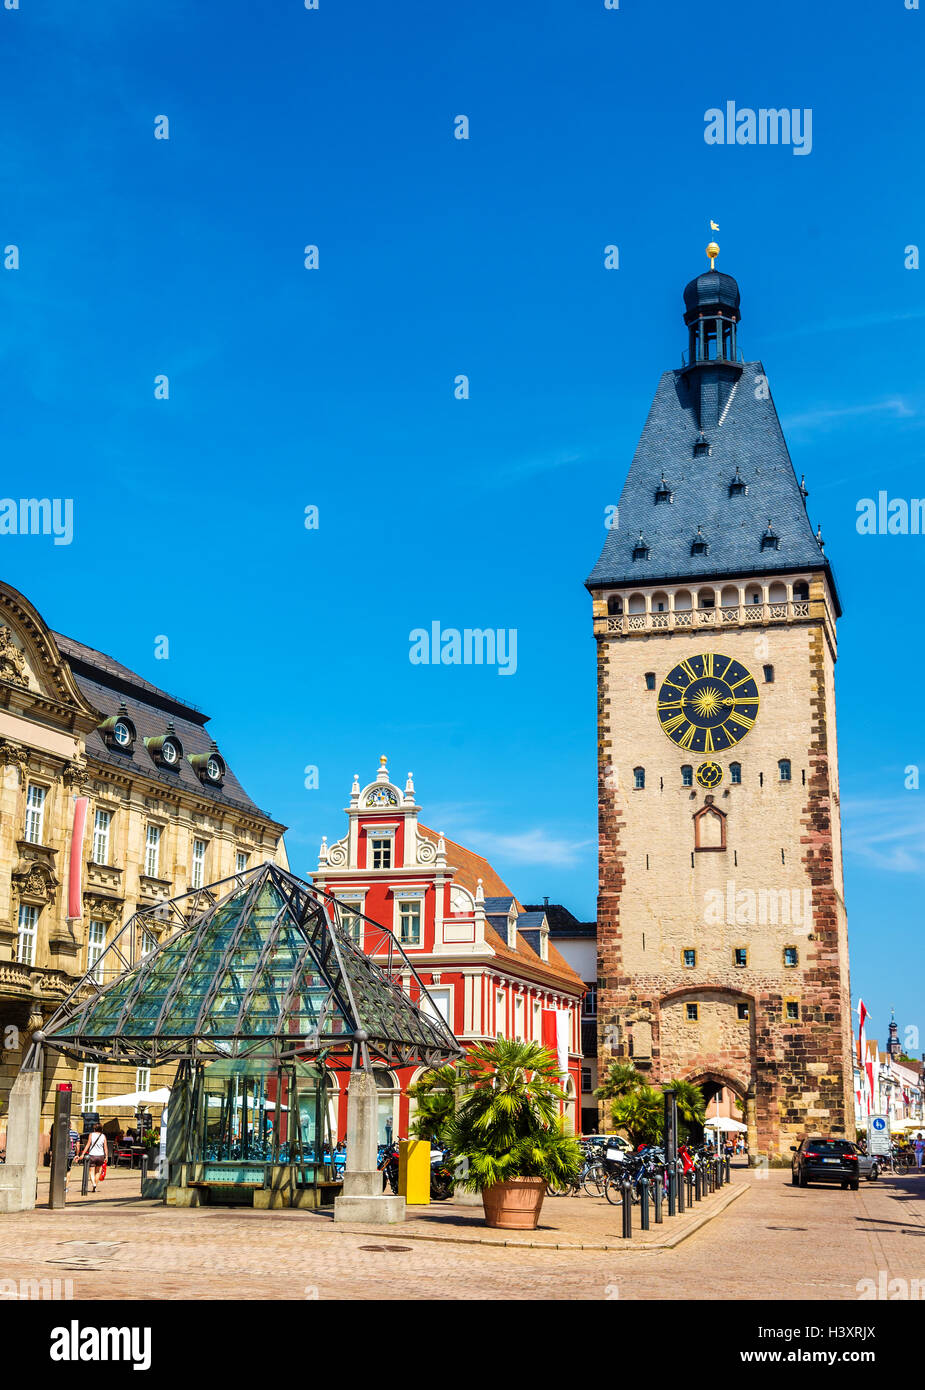 The Old Gate of Speyer - Germany, Rhineland-Palatinate Stock Photo